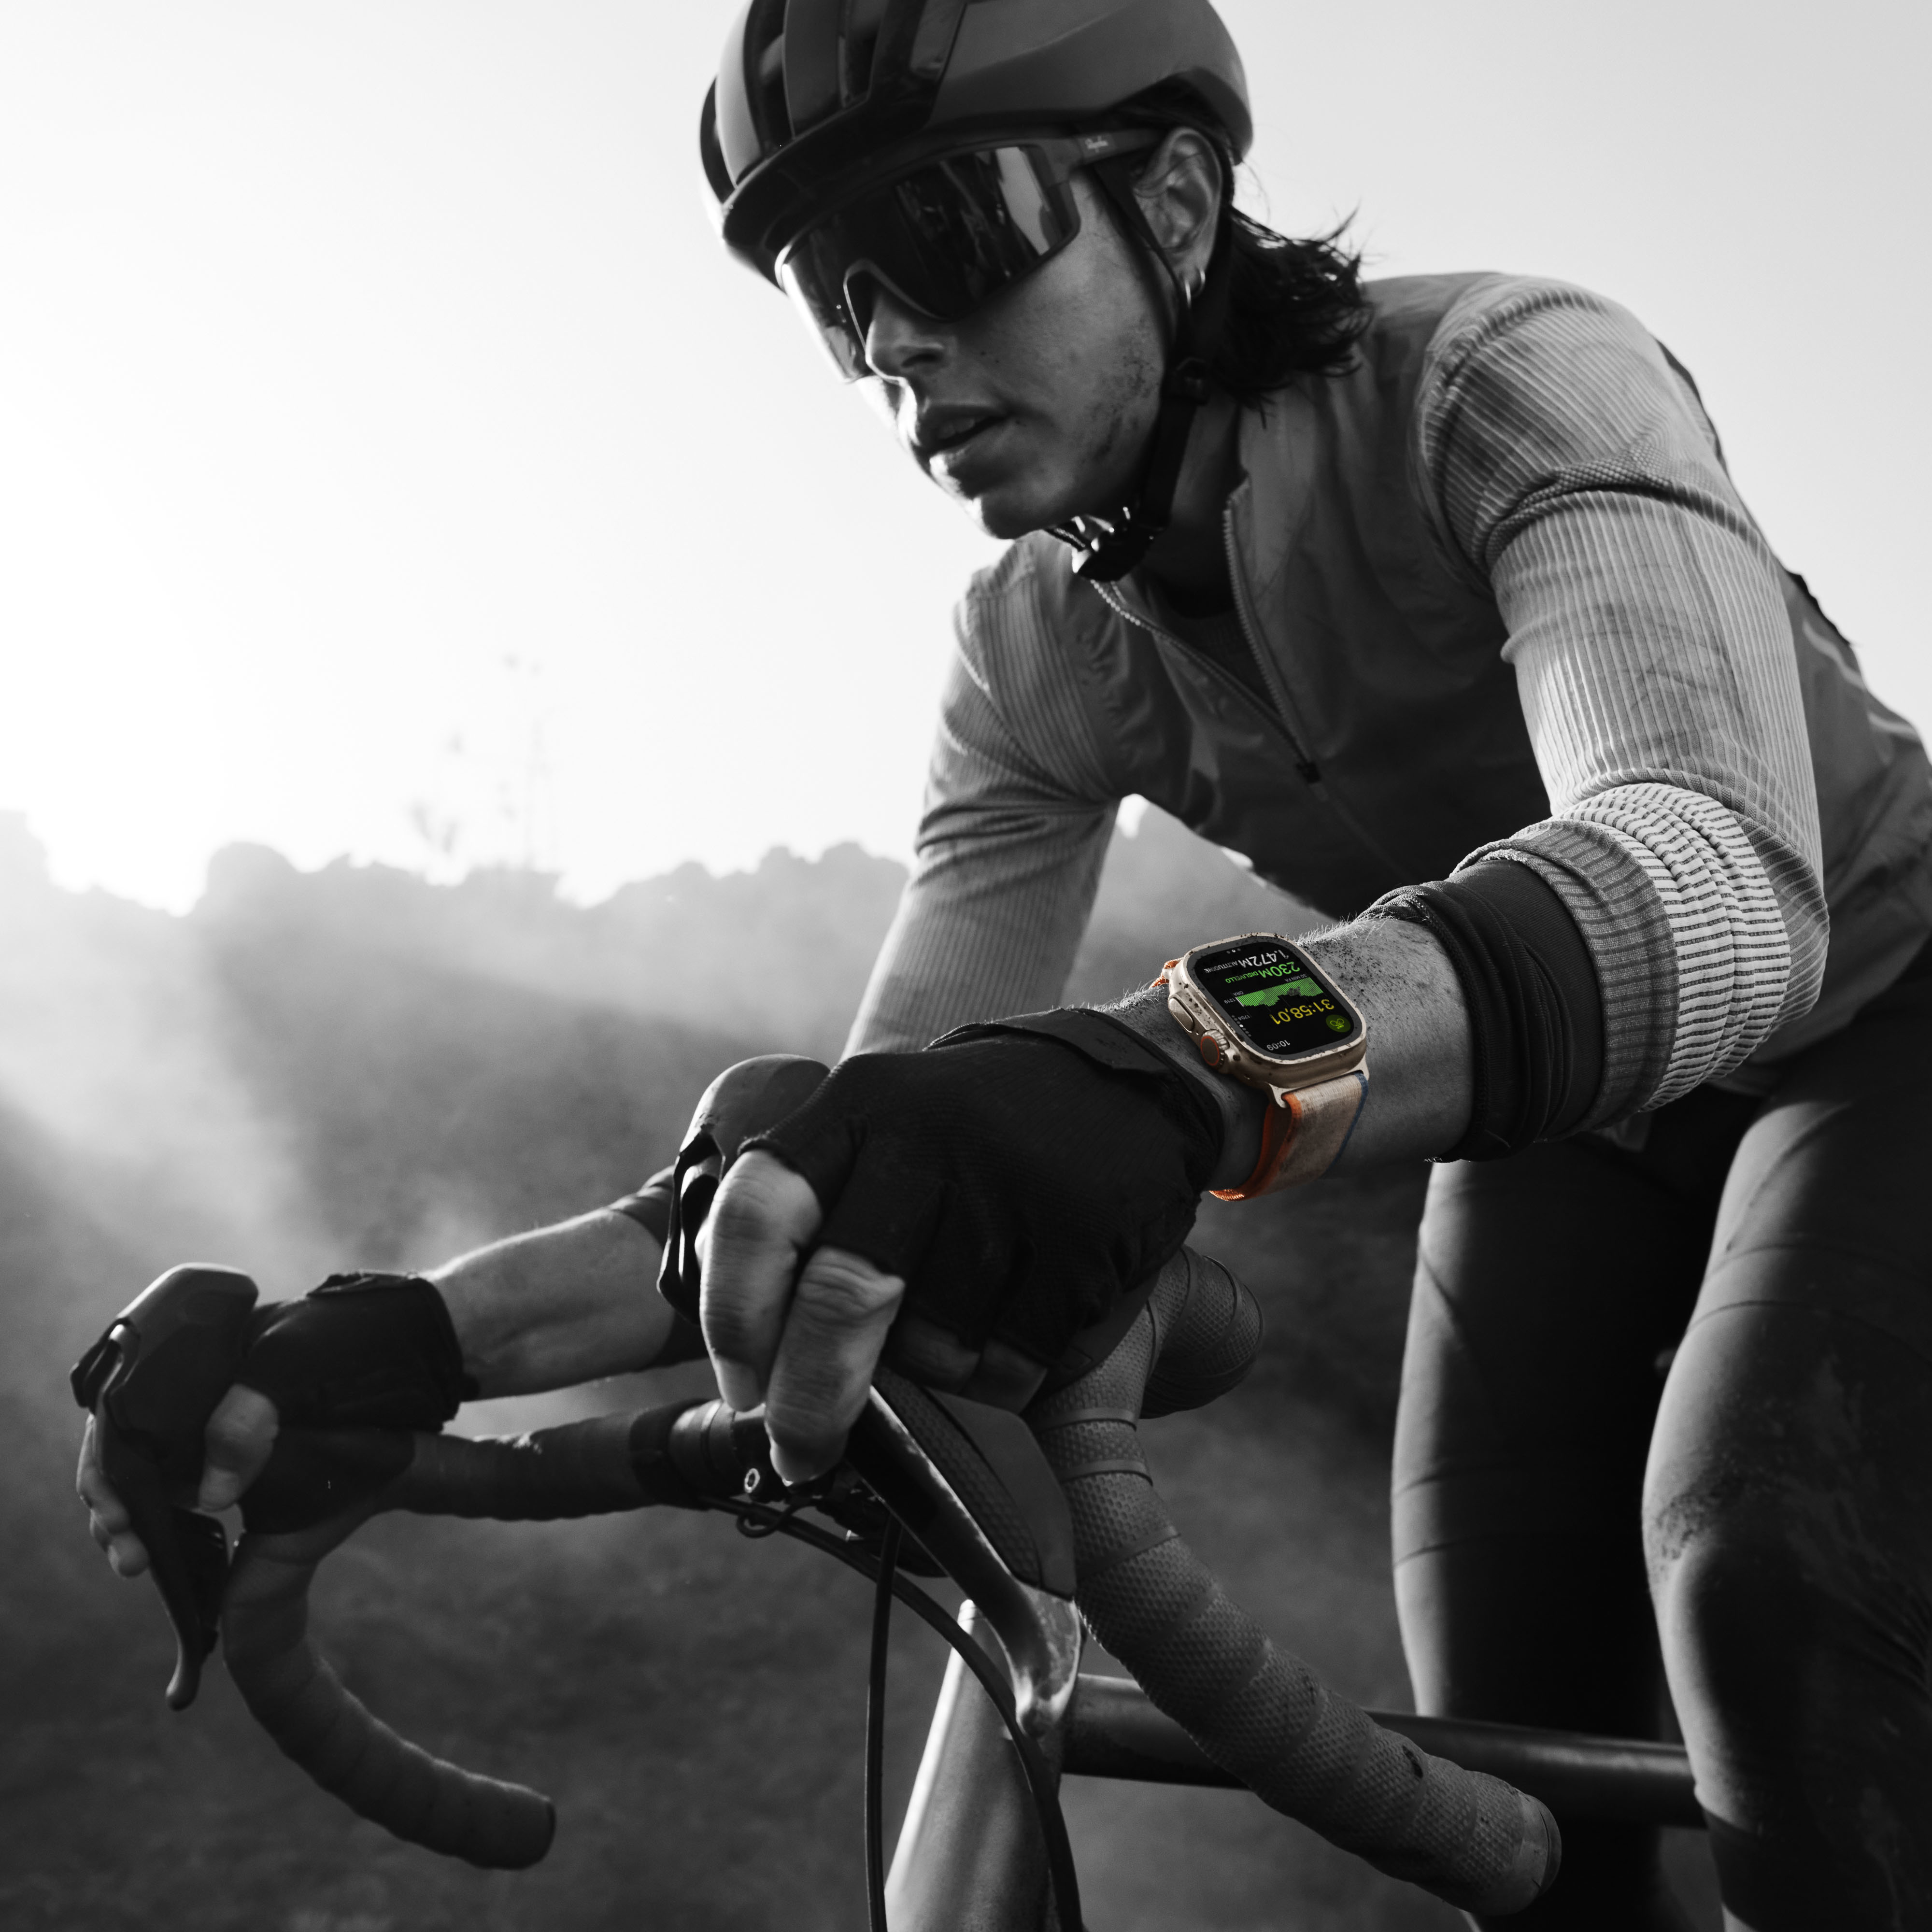 Apple - Smartwatch Apple Watch Ultra 2 GPS + Cellular, 49mm Titanium Case com White Ocean Band